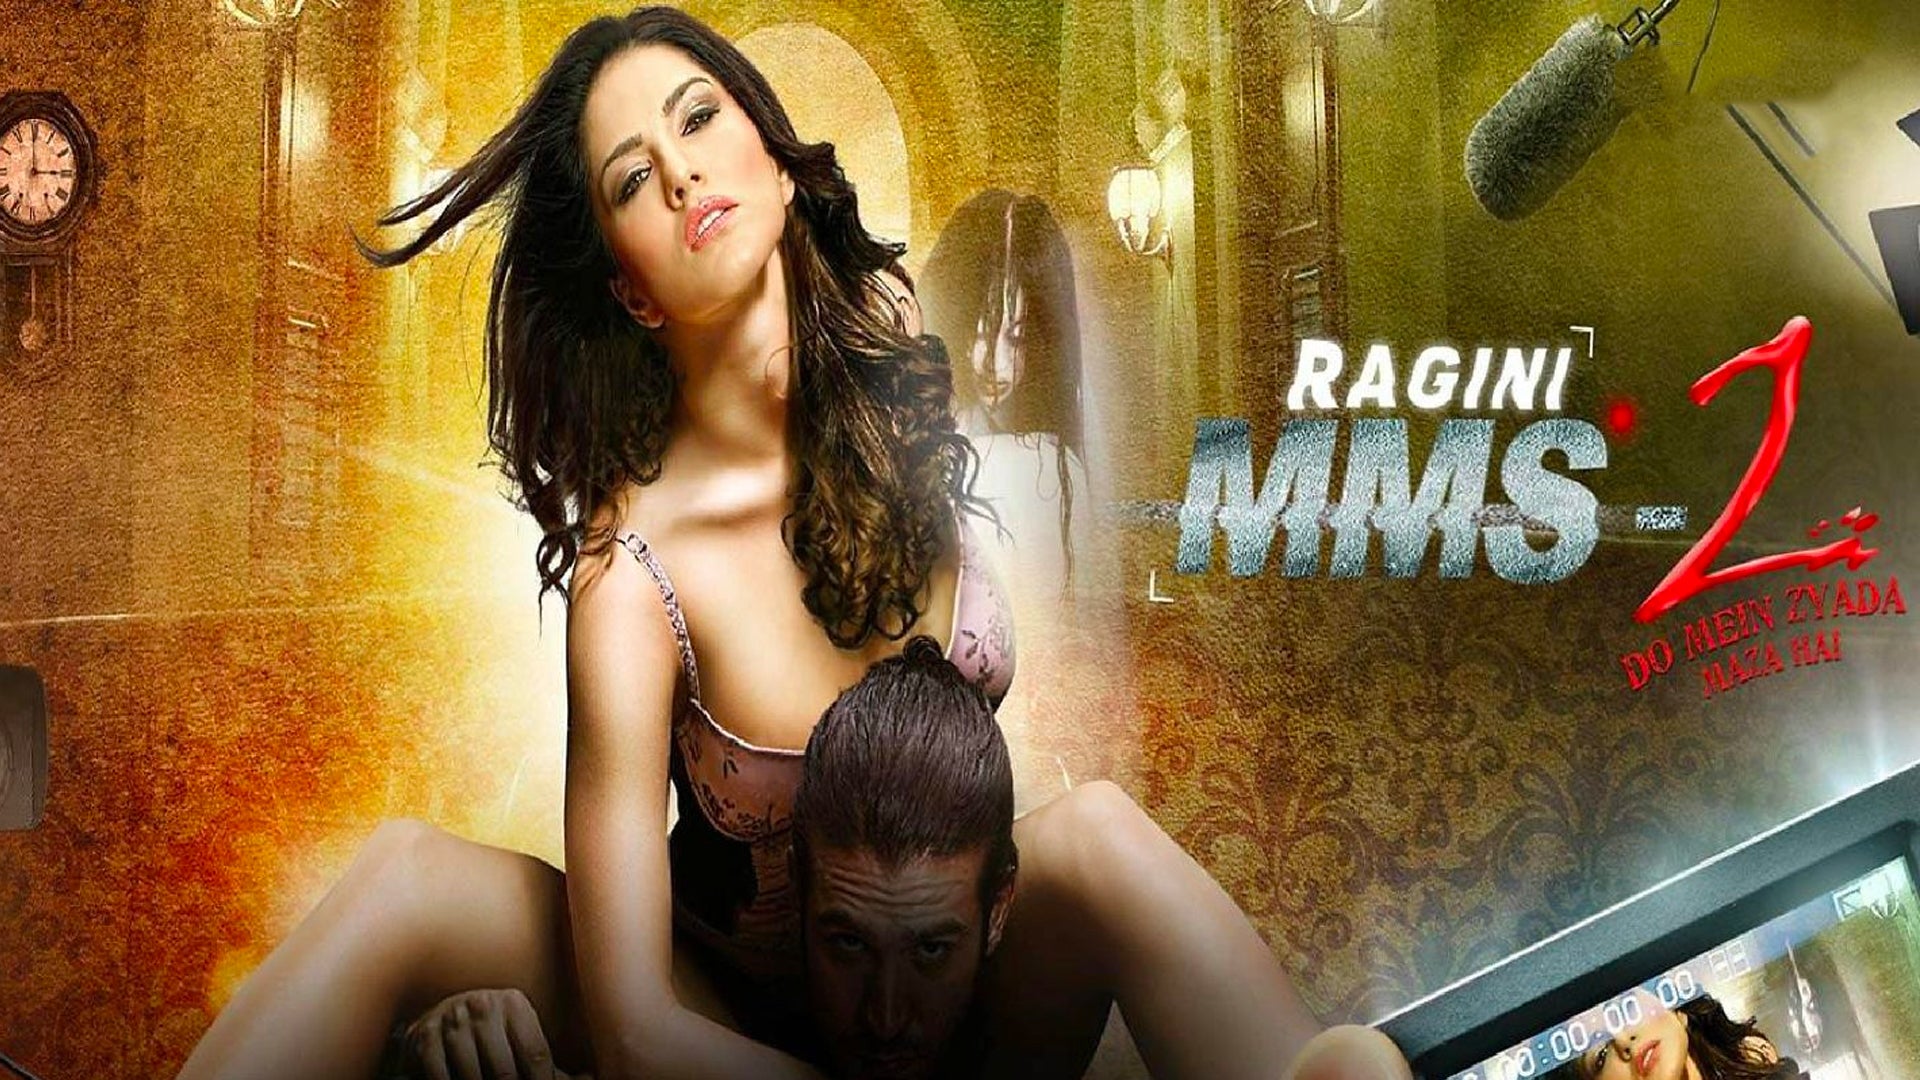 Ragini MMS 2 (2014) Hindi Movie Watch Full HD Movie Online On JioCinema